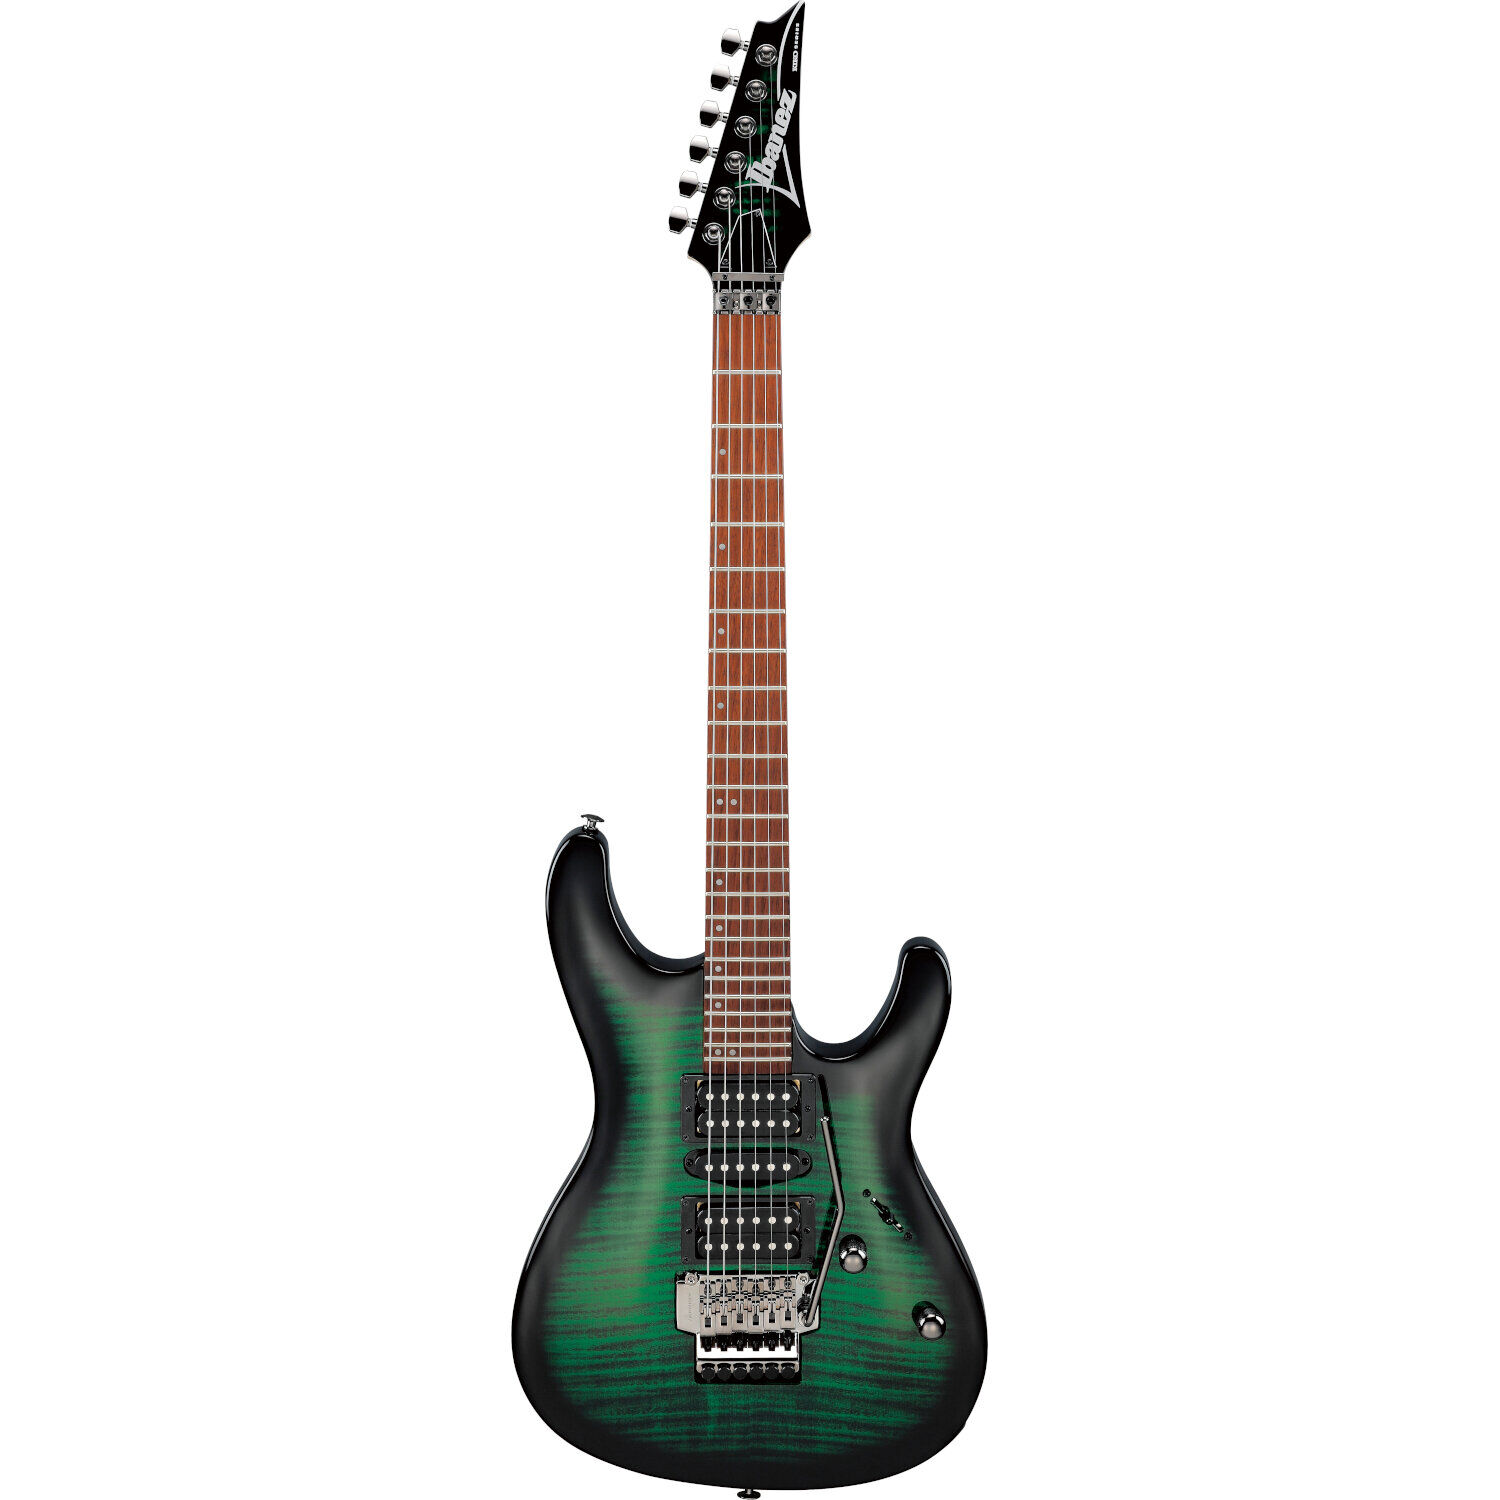 Ibanez KIKOSP3 Transparent Emerald Burst Kiko Loureiro Signature guitare électrique